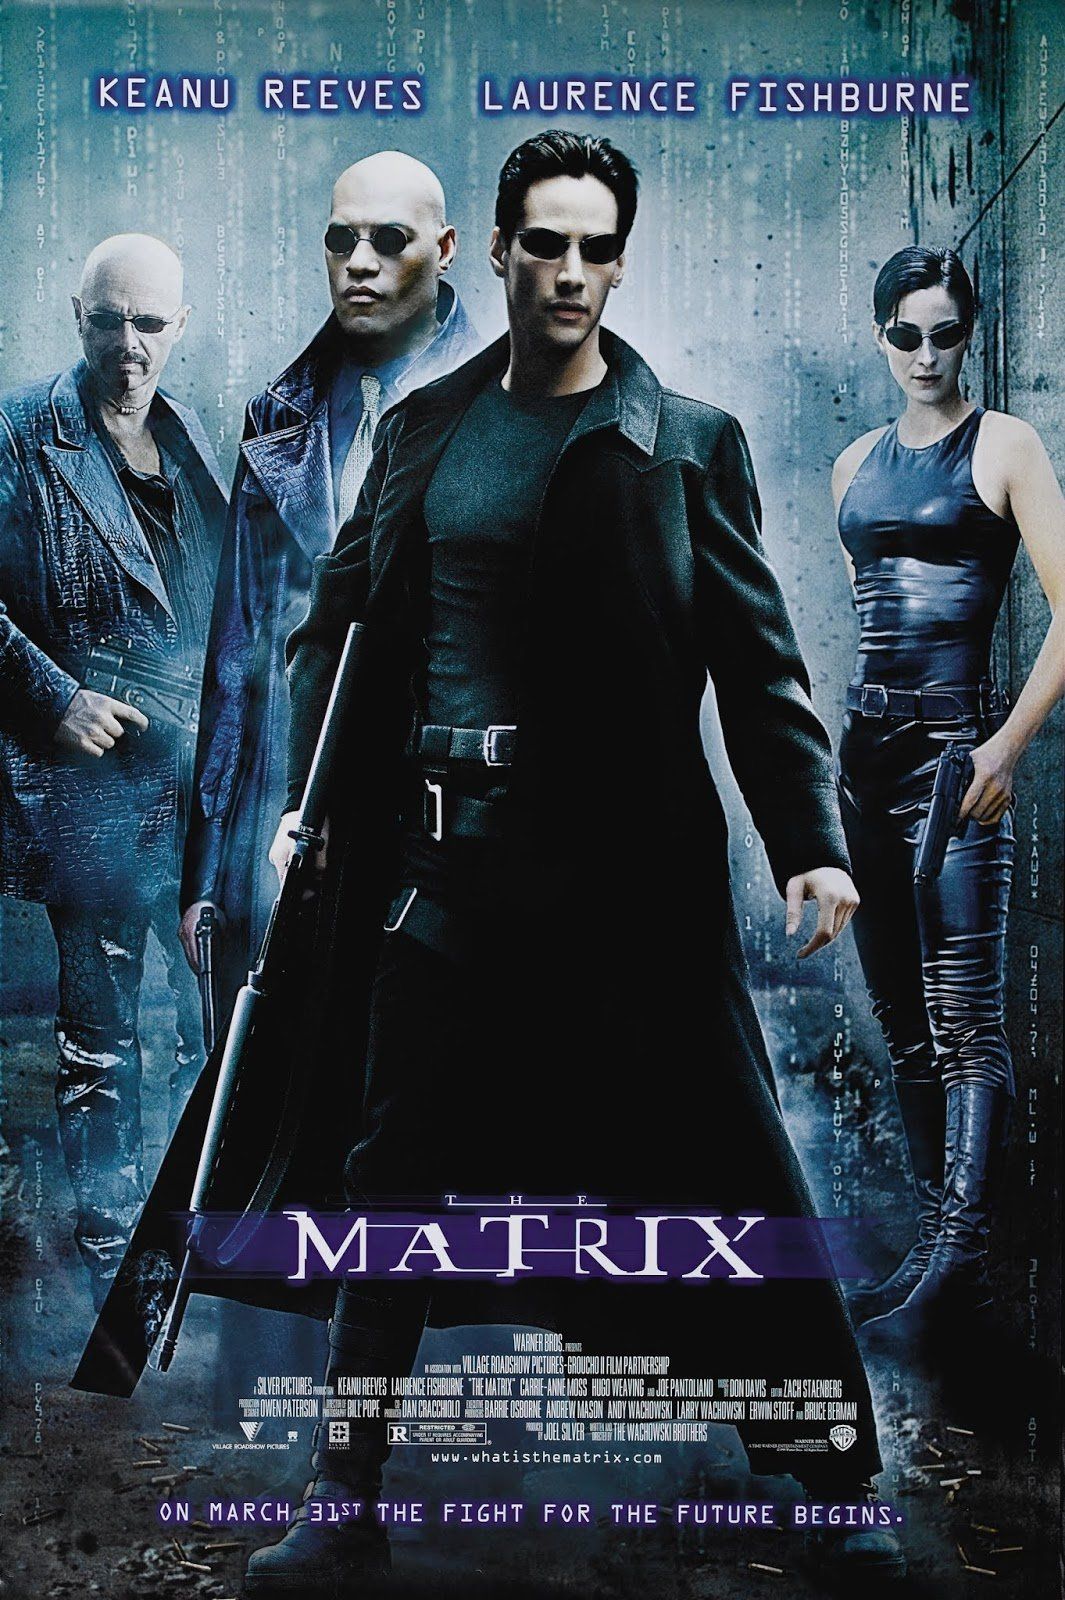 The Matrix. Image copyright: Warner Brothers